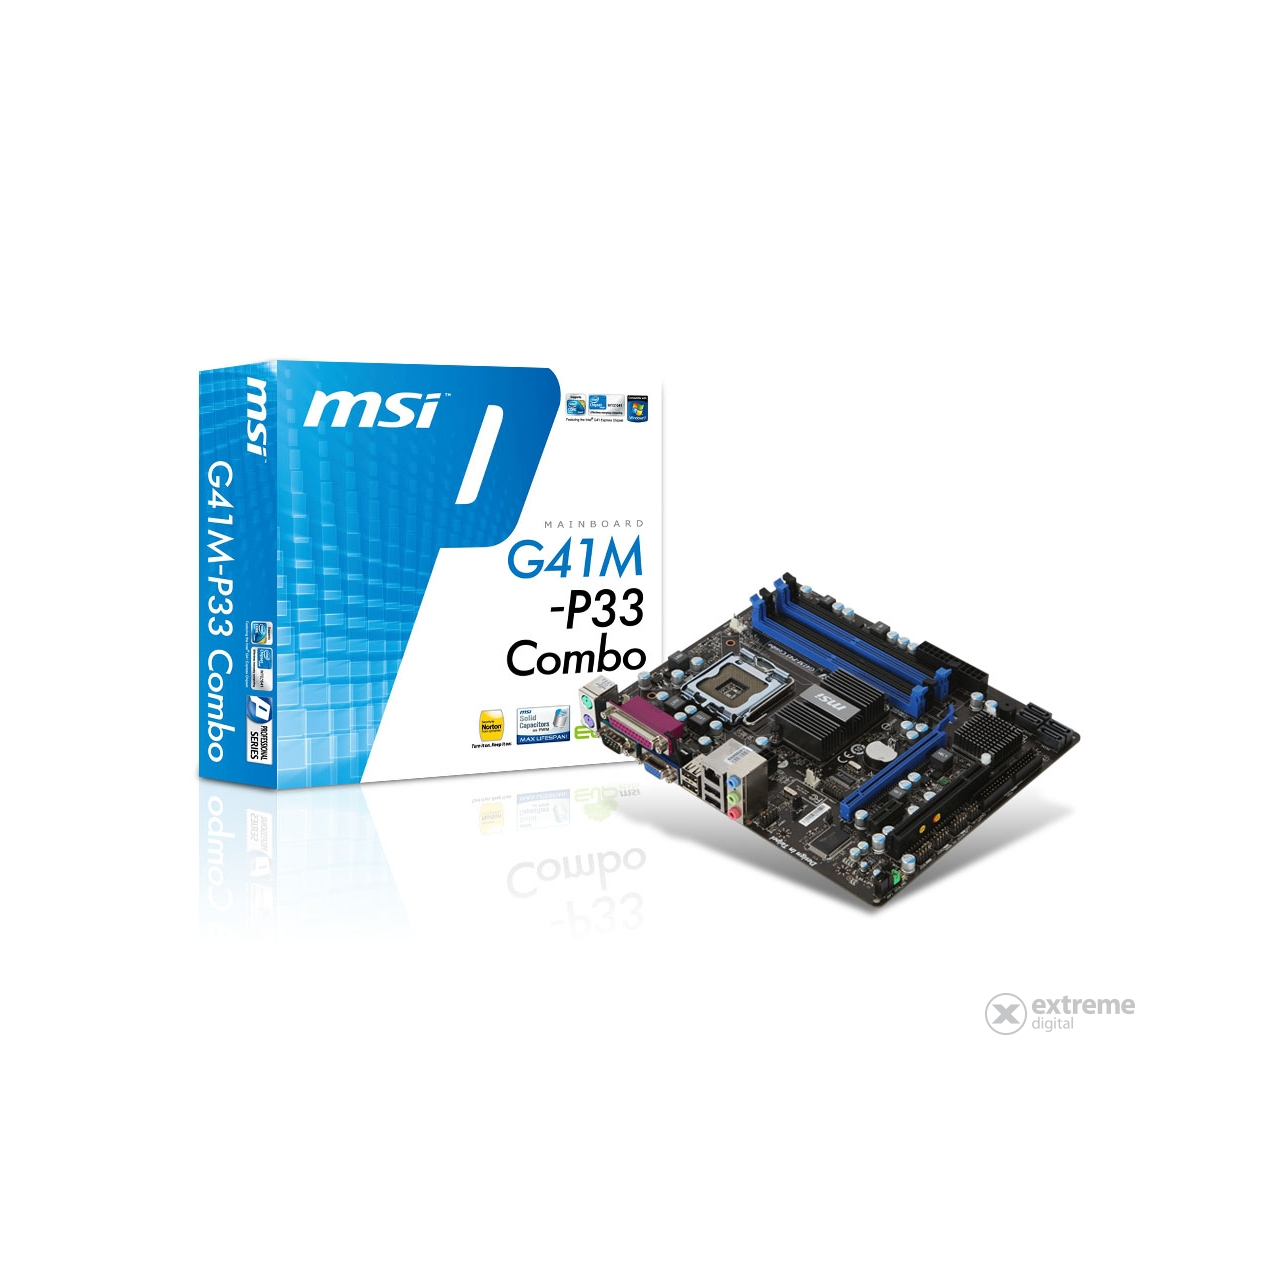 MSI G41M-P33 Combo Intel LGA775 mATX alaplap